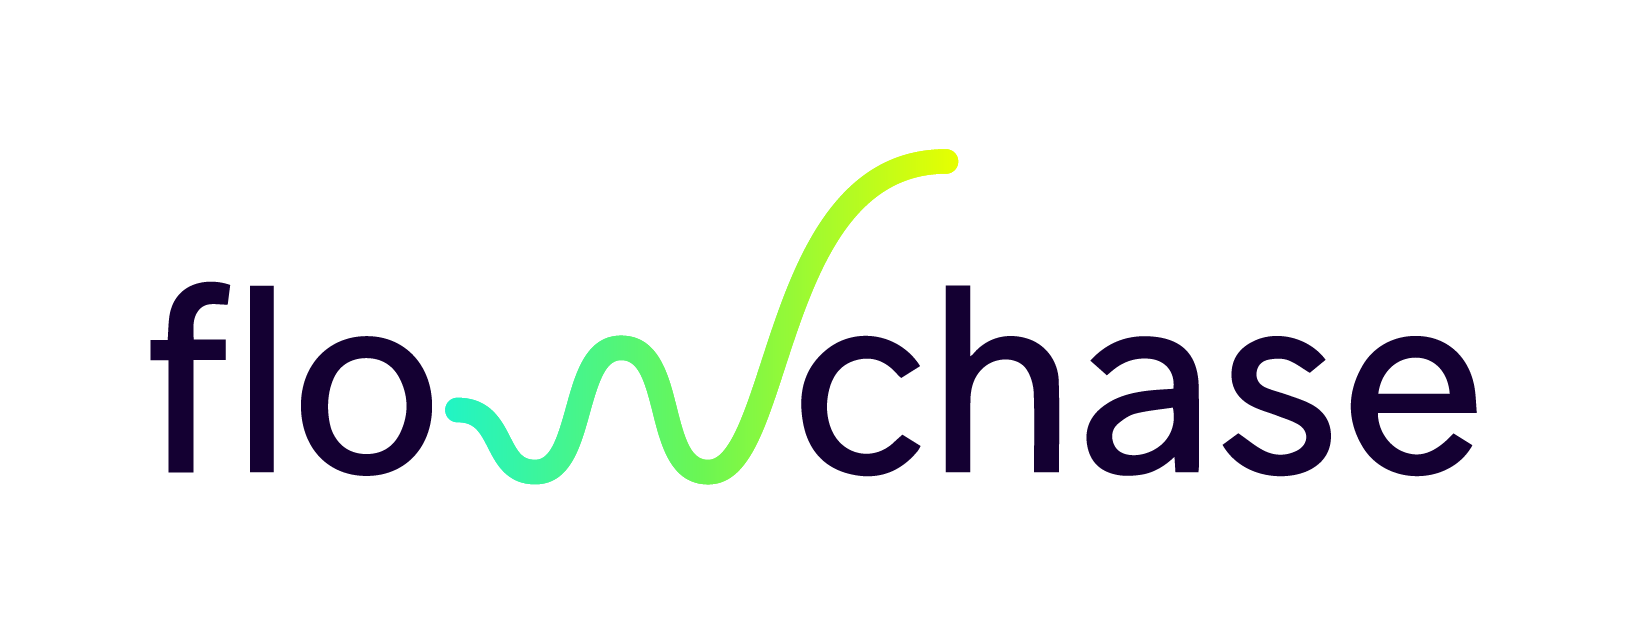 Flowchase-colour-logo